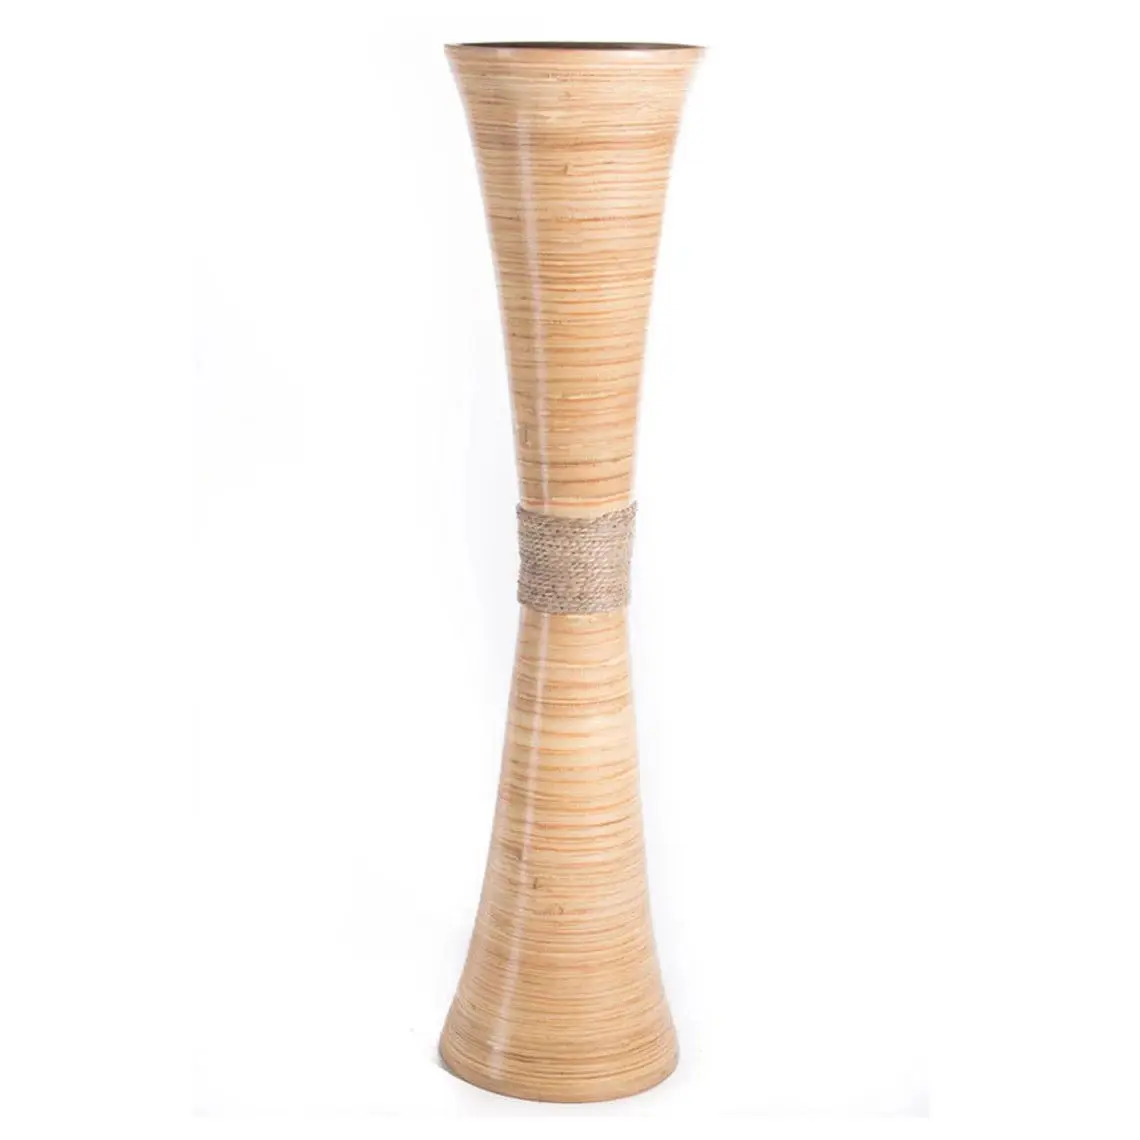 Hot New Design Spun Bamboo Flower Vases Glass Vase For Home Decor Natural Safe Wicker Home Bedroom Furniture